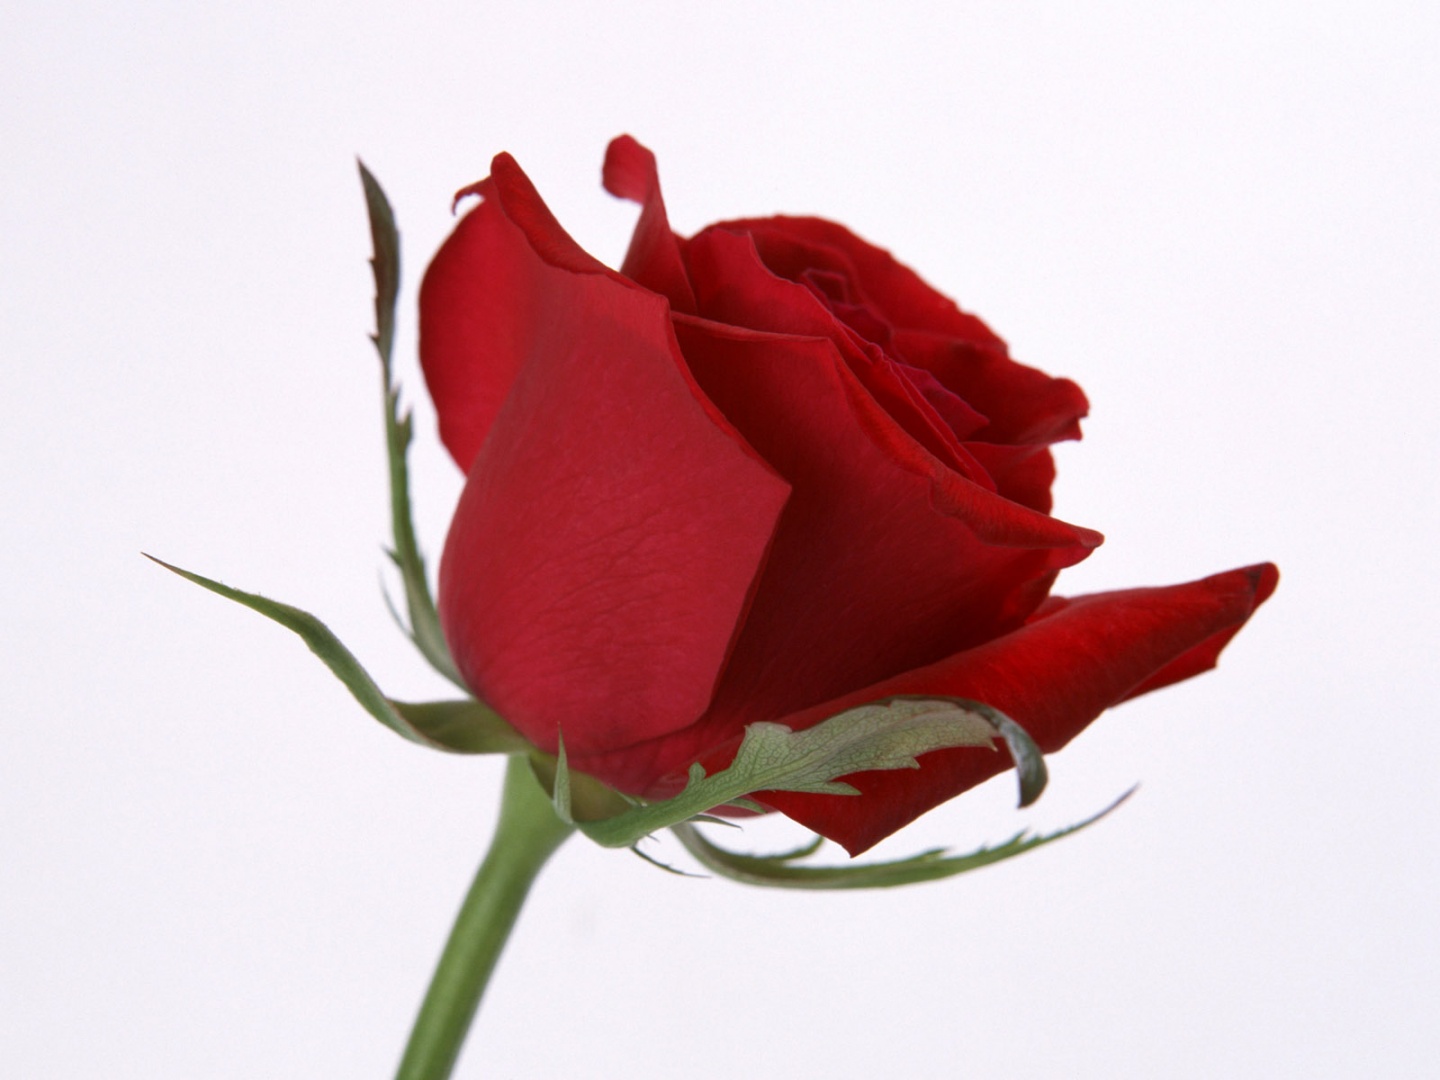 Rosa Bild: Single Red Rose Image Good Morning